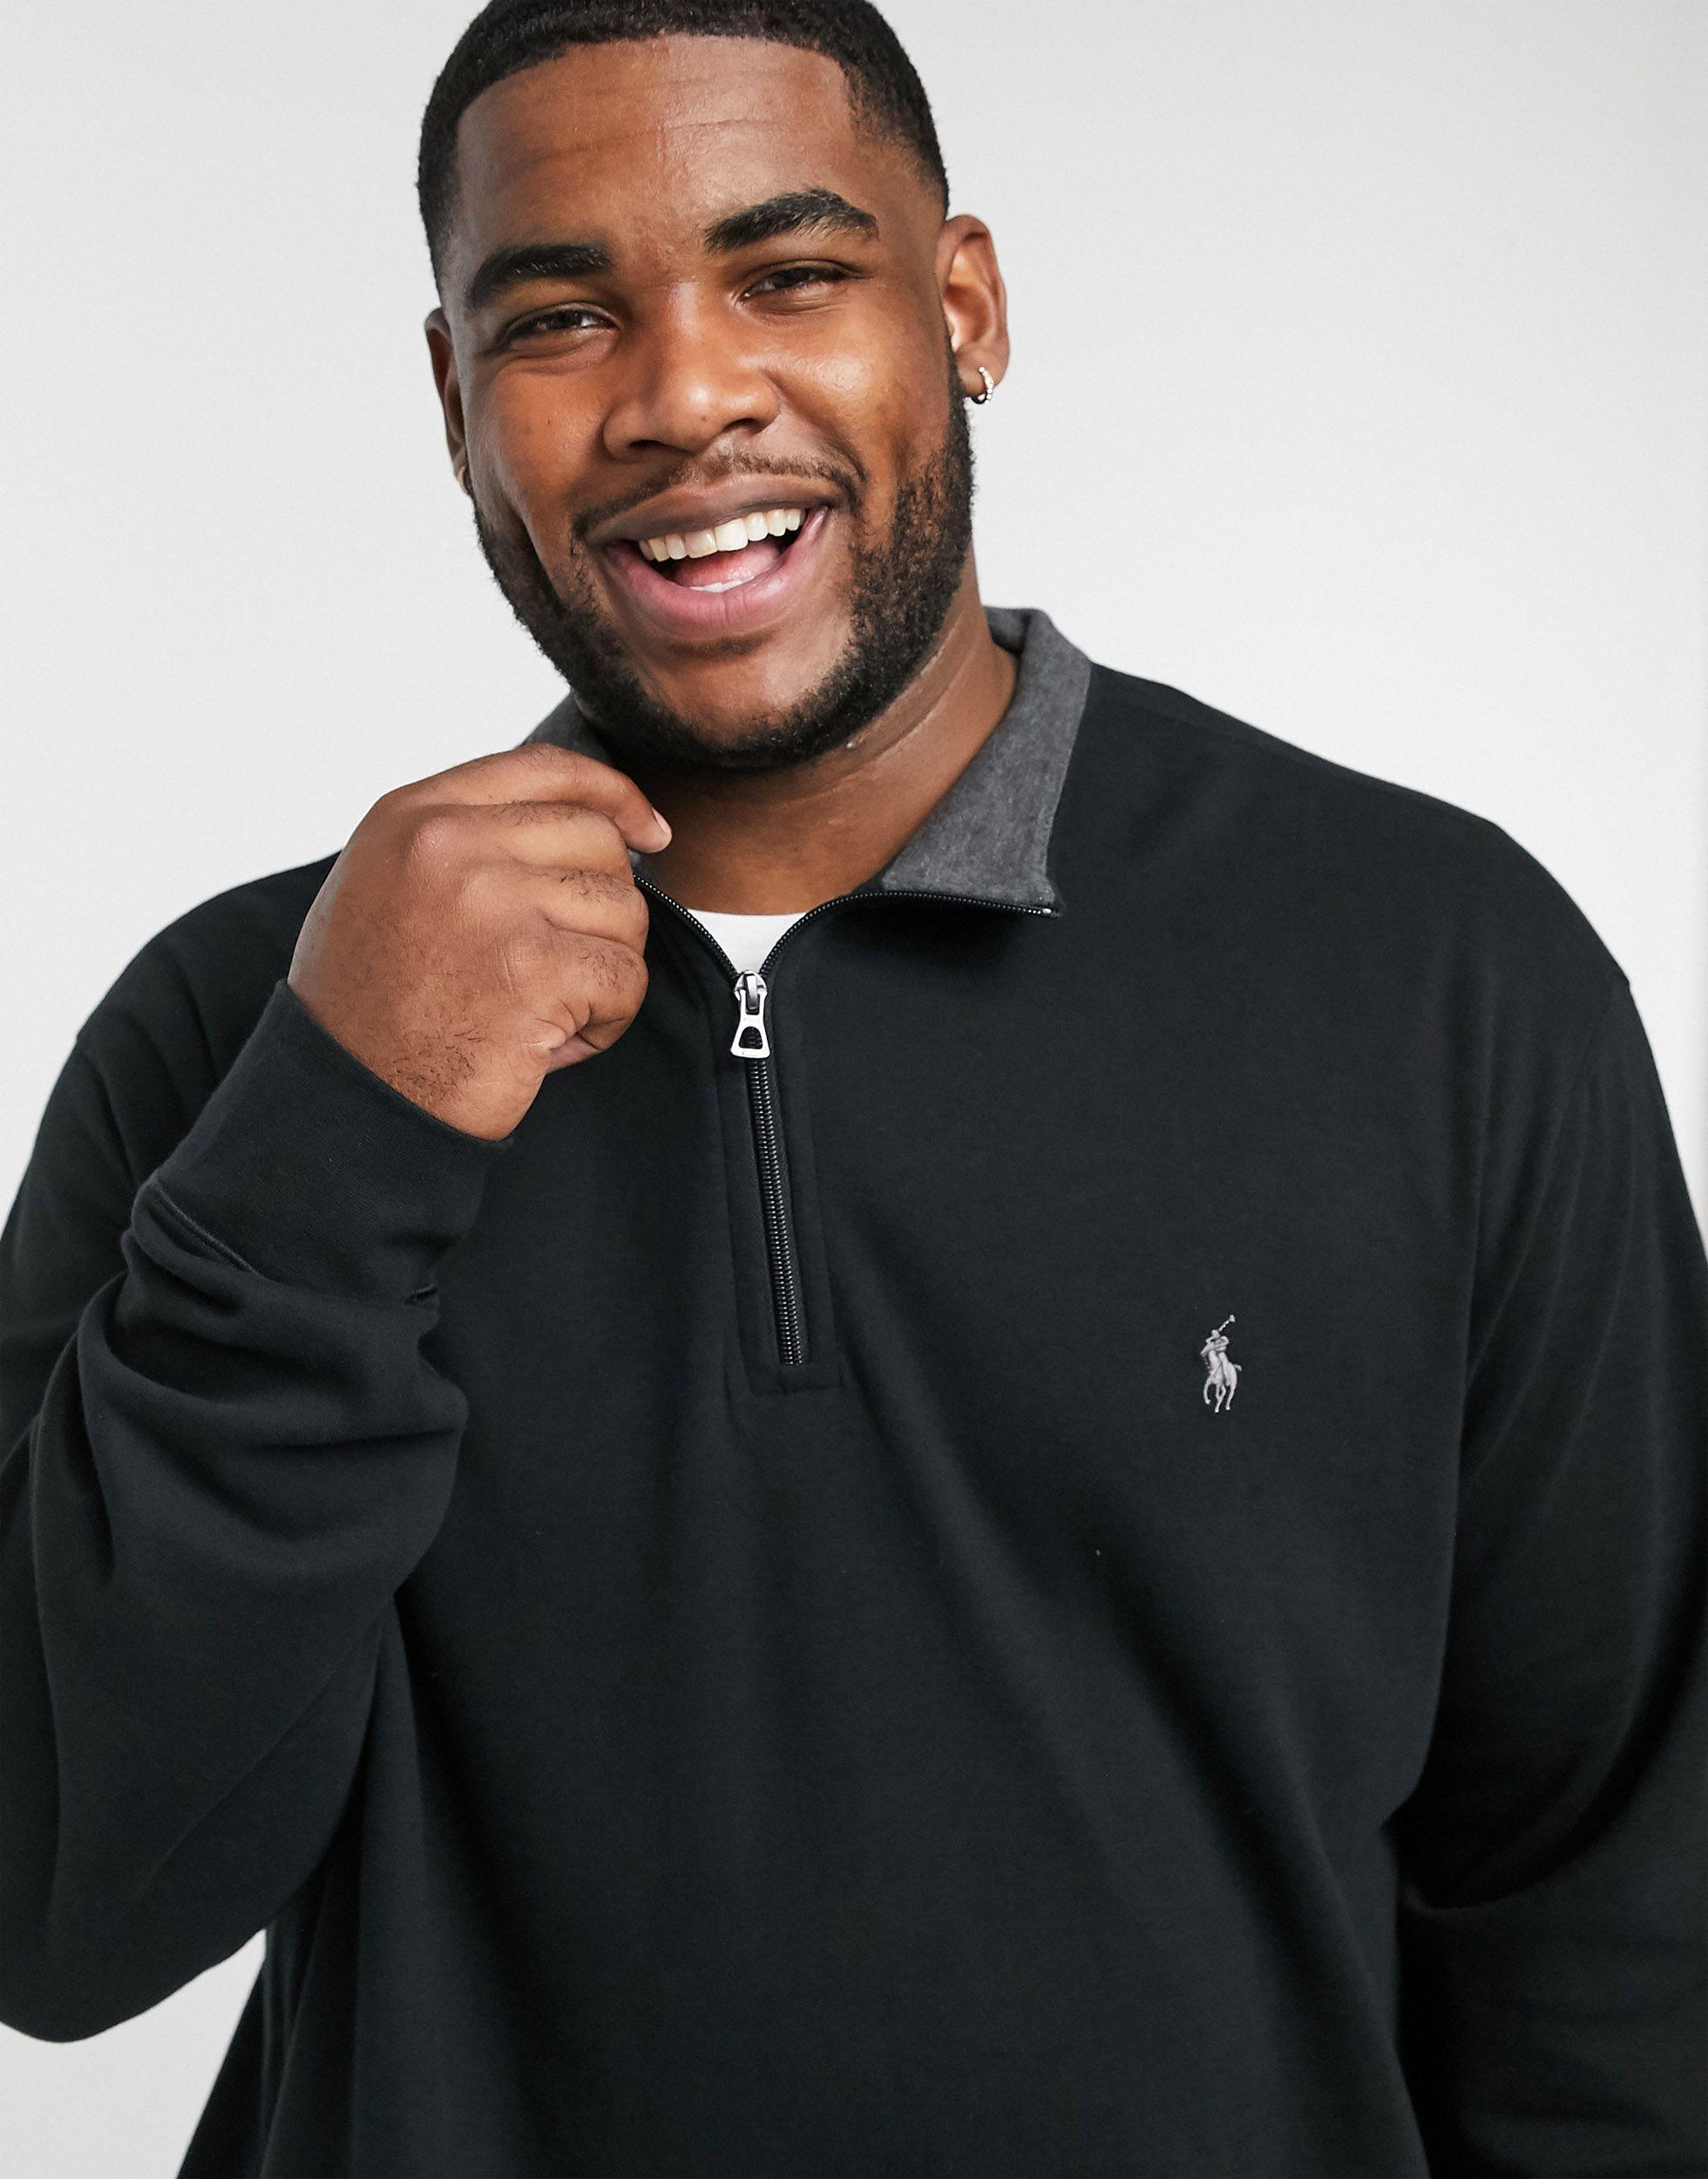 Polo Ralph Lauren Big & Tall Multi Player Logo Sweatshirt Double Knit in Black for Men - Lyst